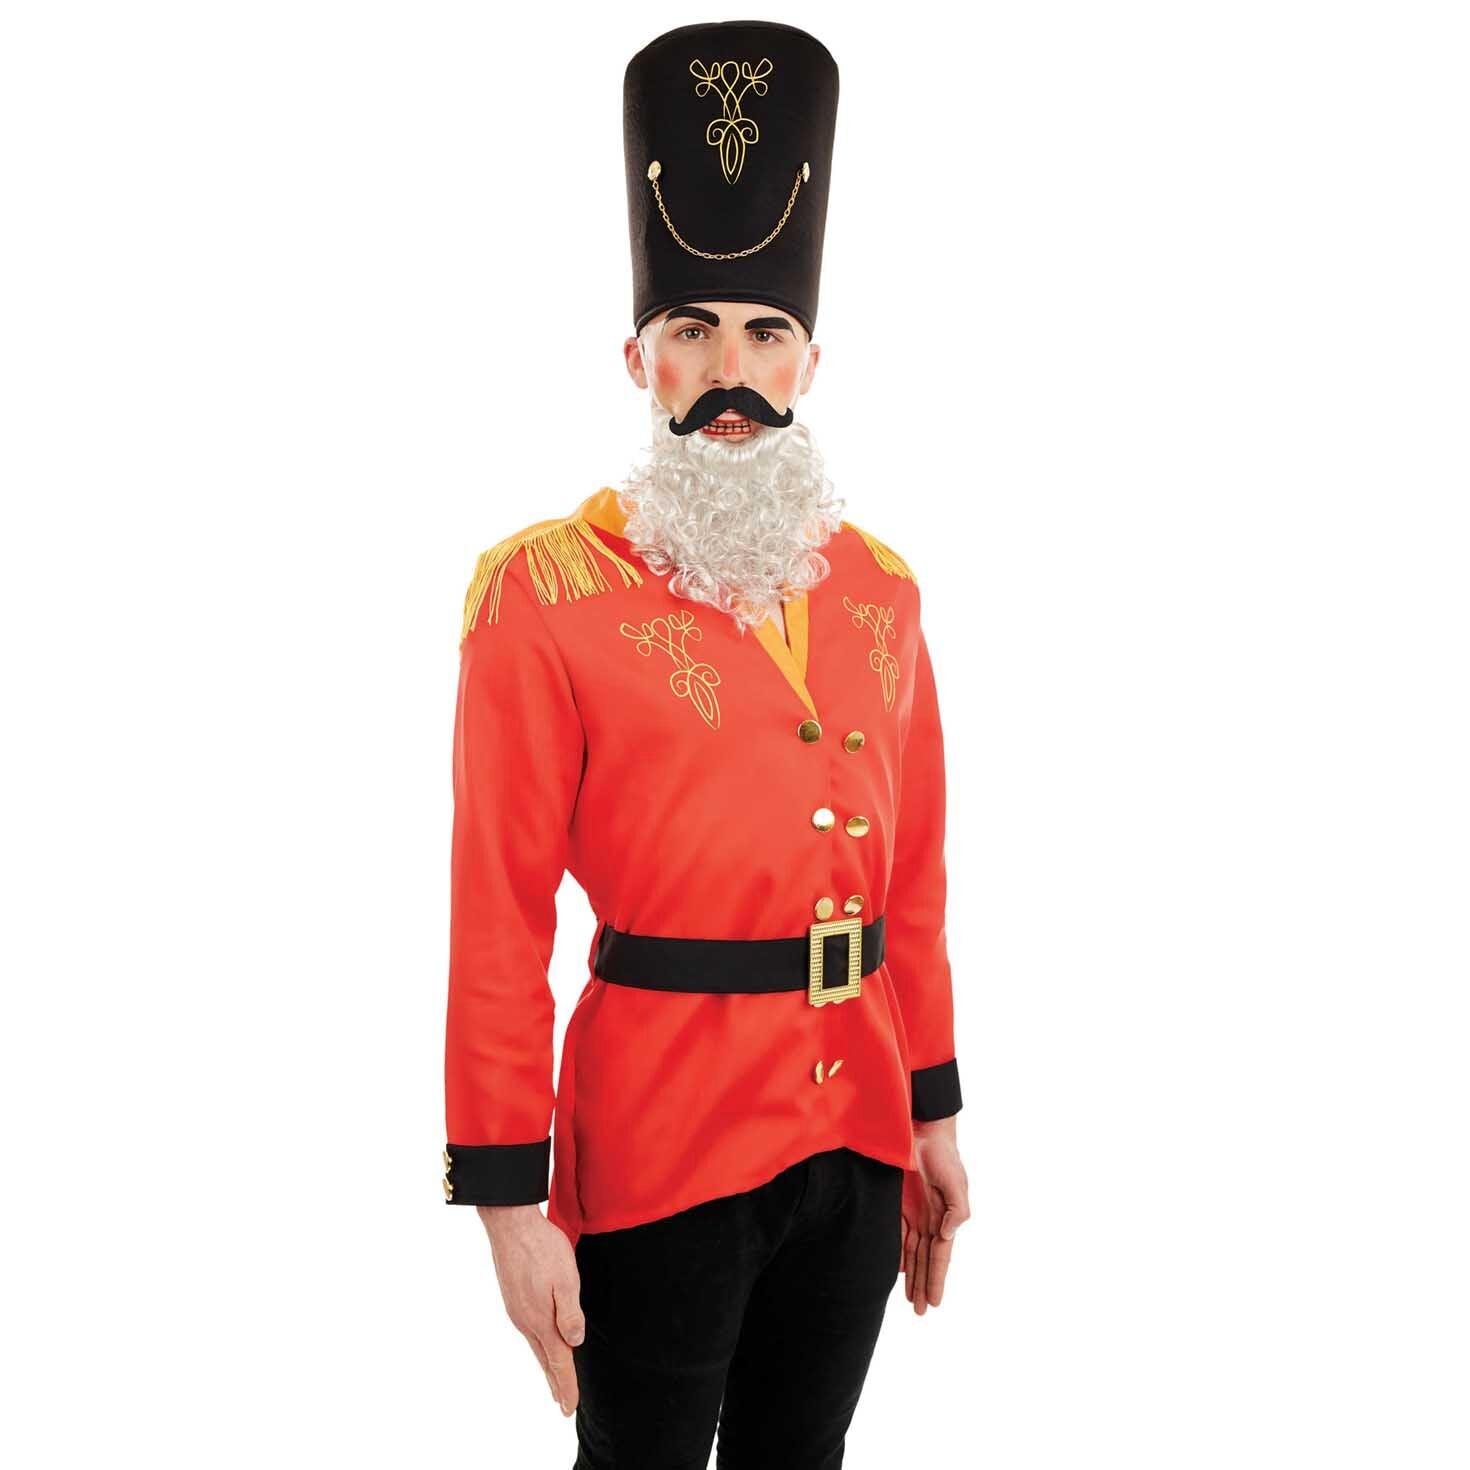 Men's Nutcracker Soldier costume